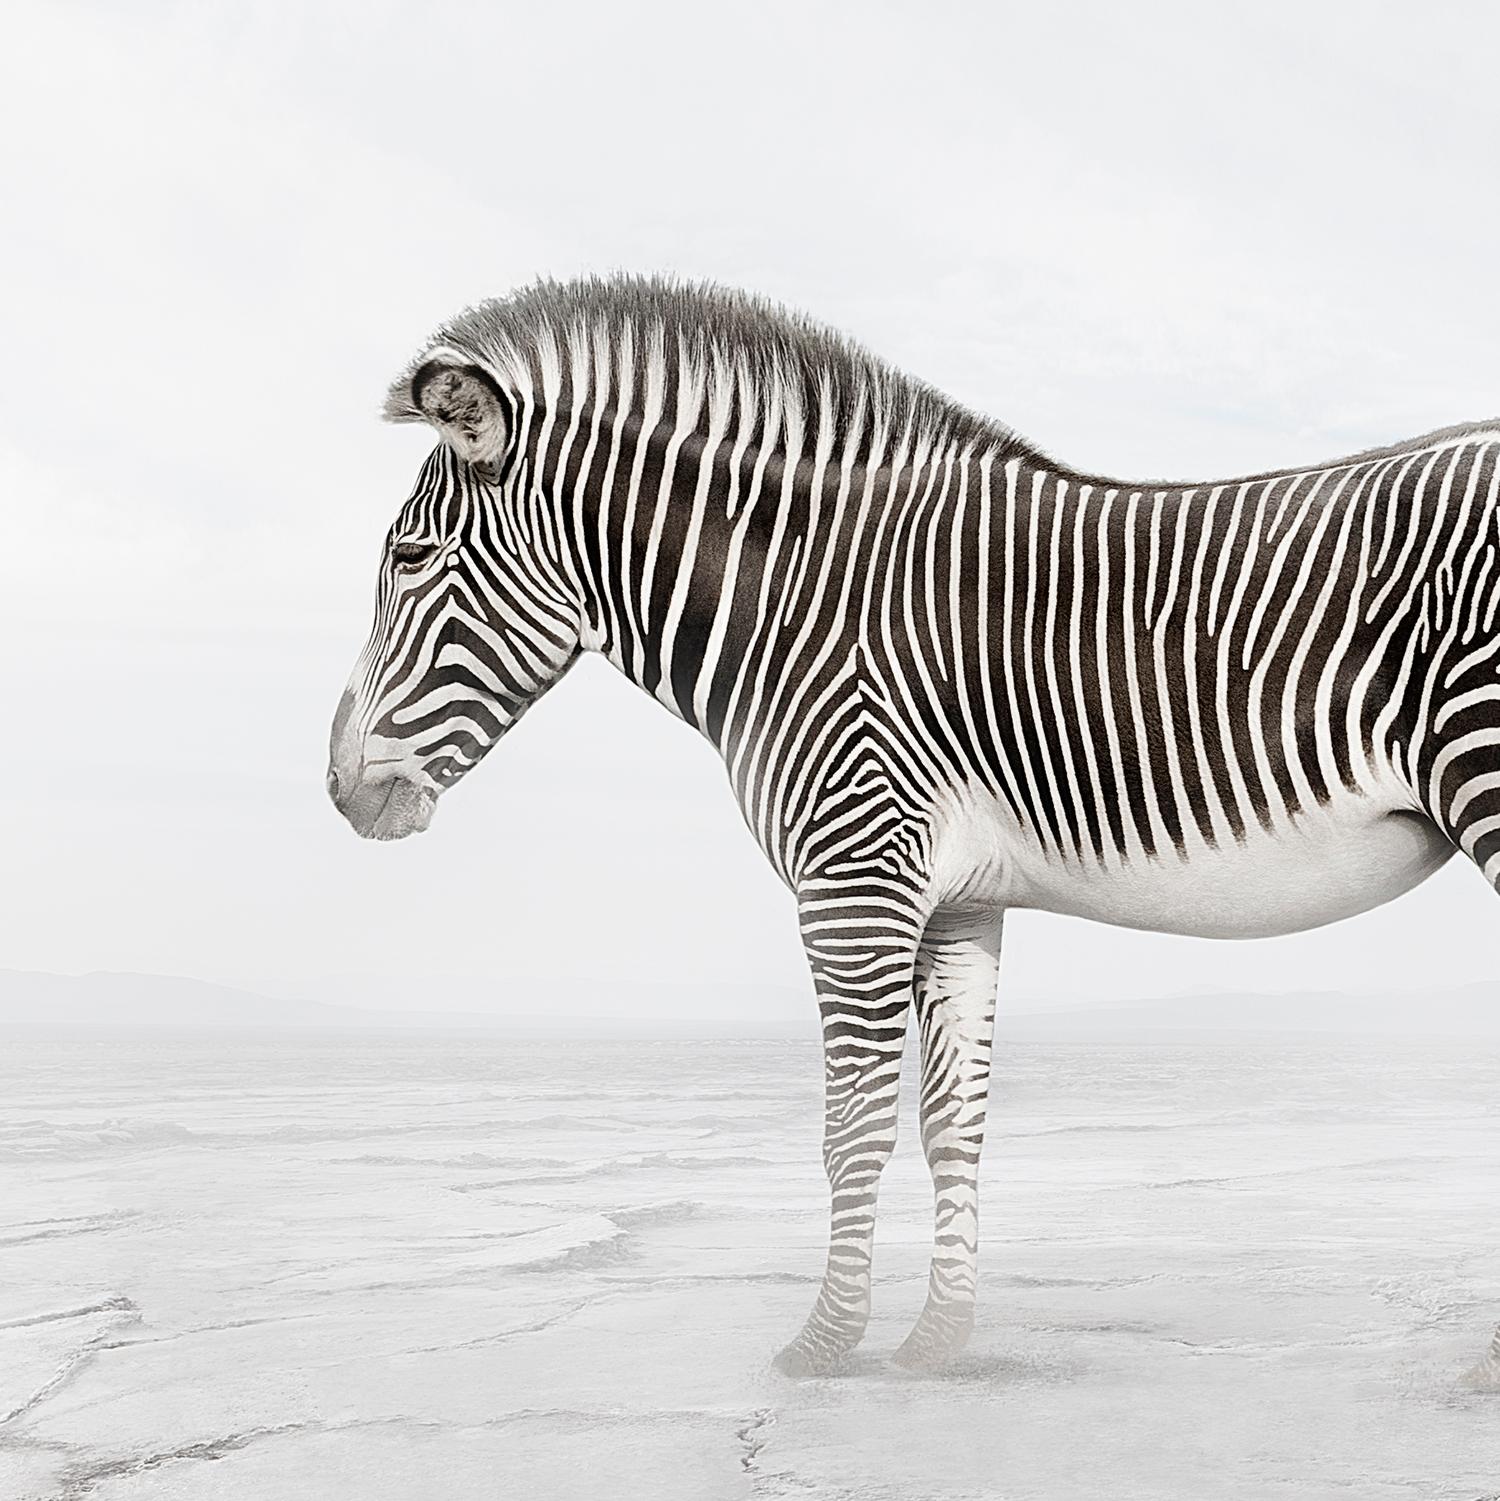 Zen Zebra - animal photography, color photography - Photograph by Alice Zilberberg